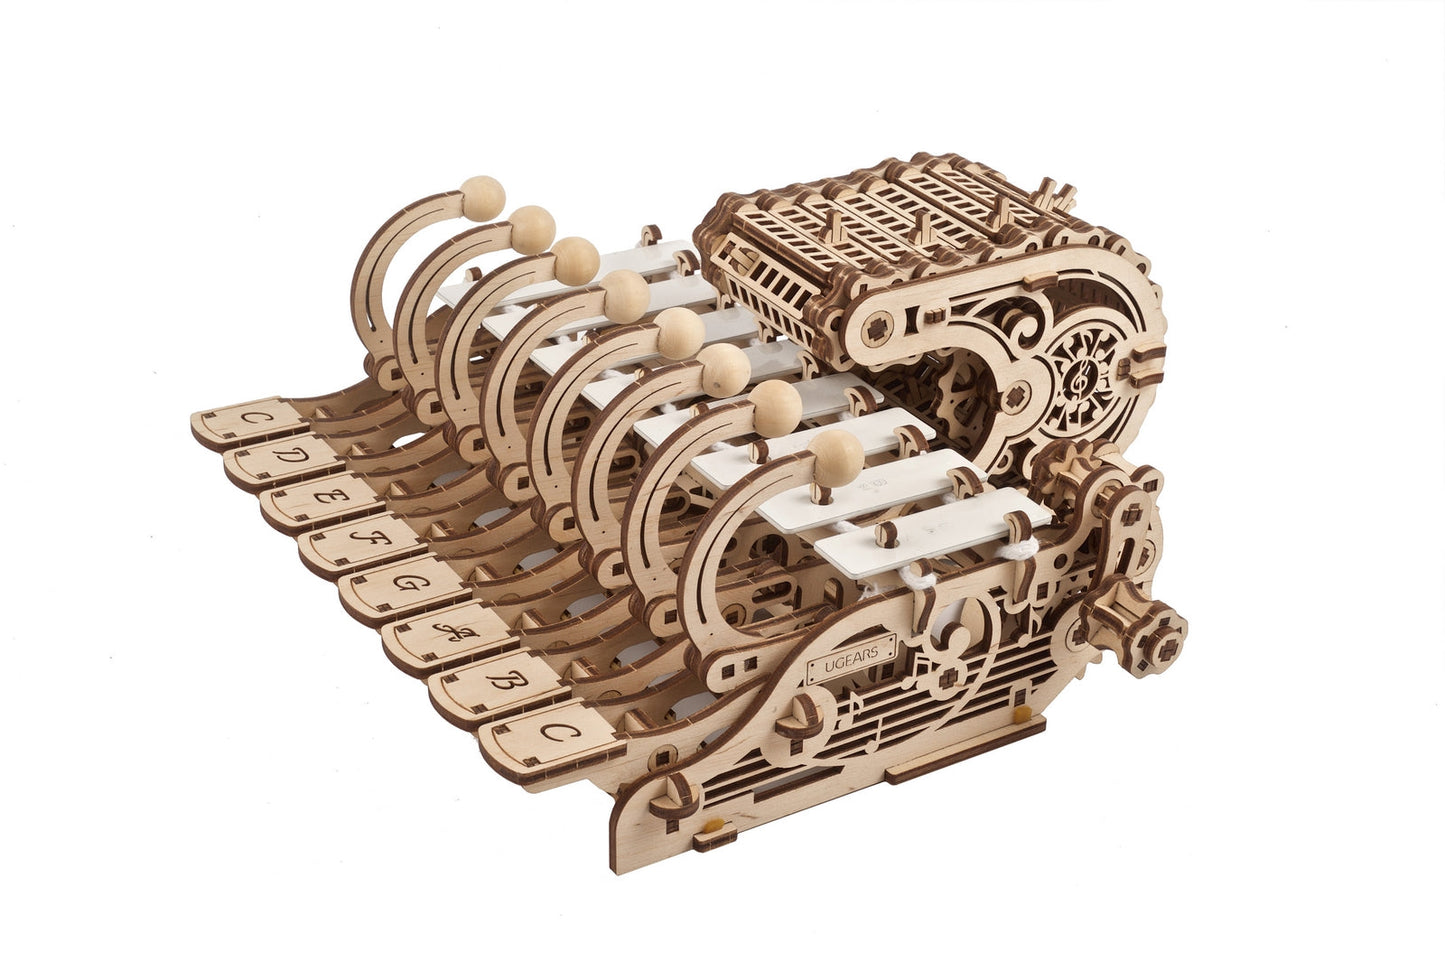 Ugears Mechanical Celesta ★Mechanical 3D Puzzle Kit Model Toys Gift Present Birthday Xmas Christmas Kids Adults